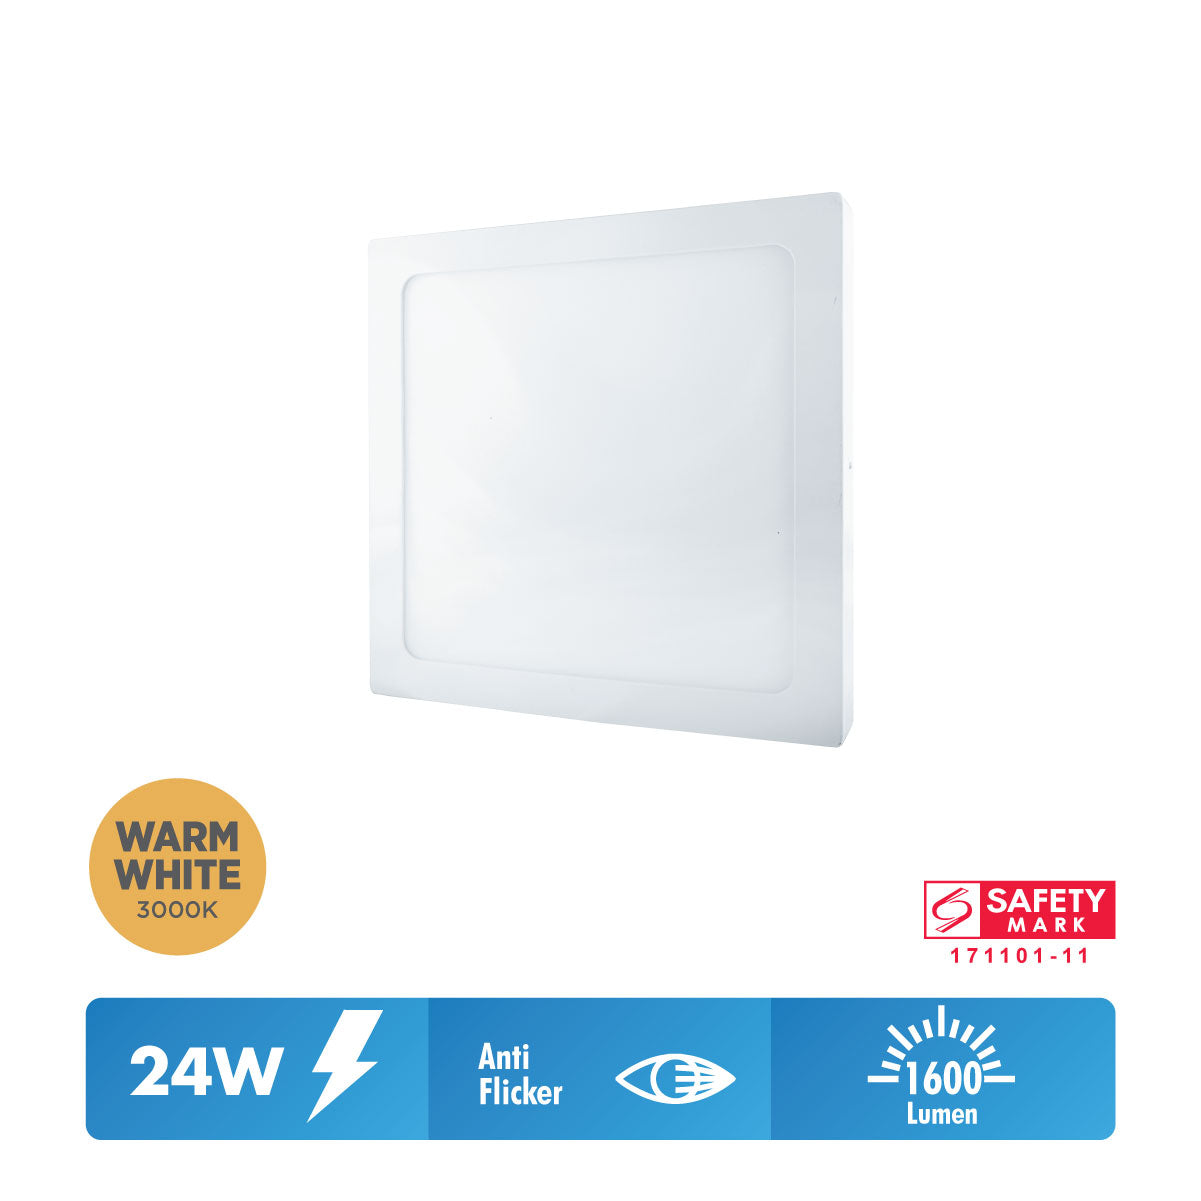 Daiyo LPS 153-WW 24W LED Surfaced Panel Light Square Shape (Warm White)